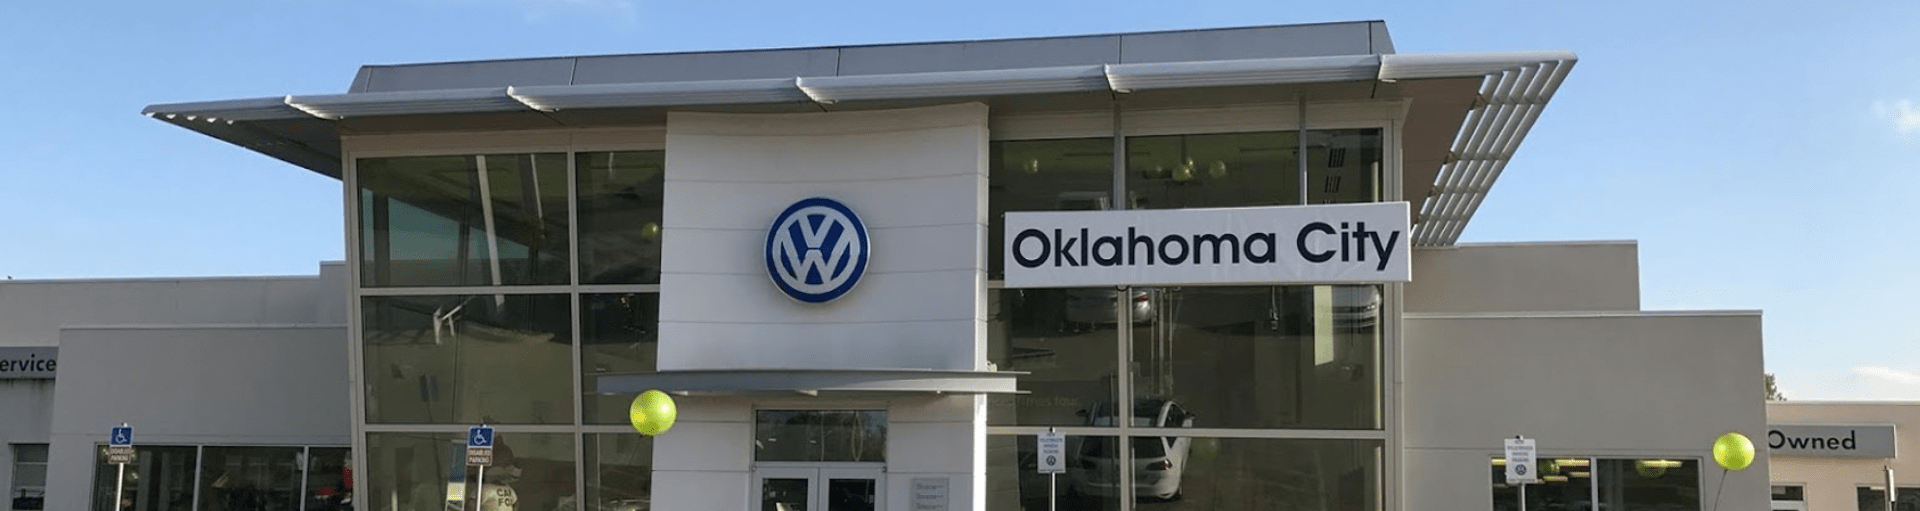 Oklahoma City Volkswagen Wheel Alignment Services